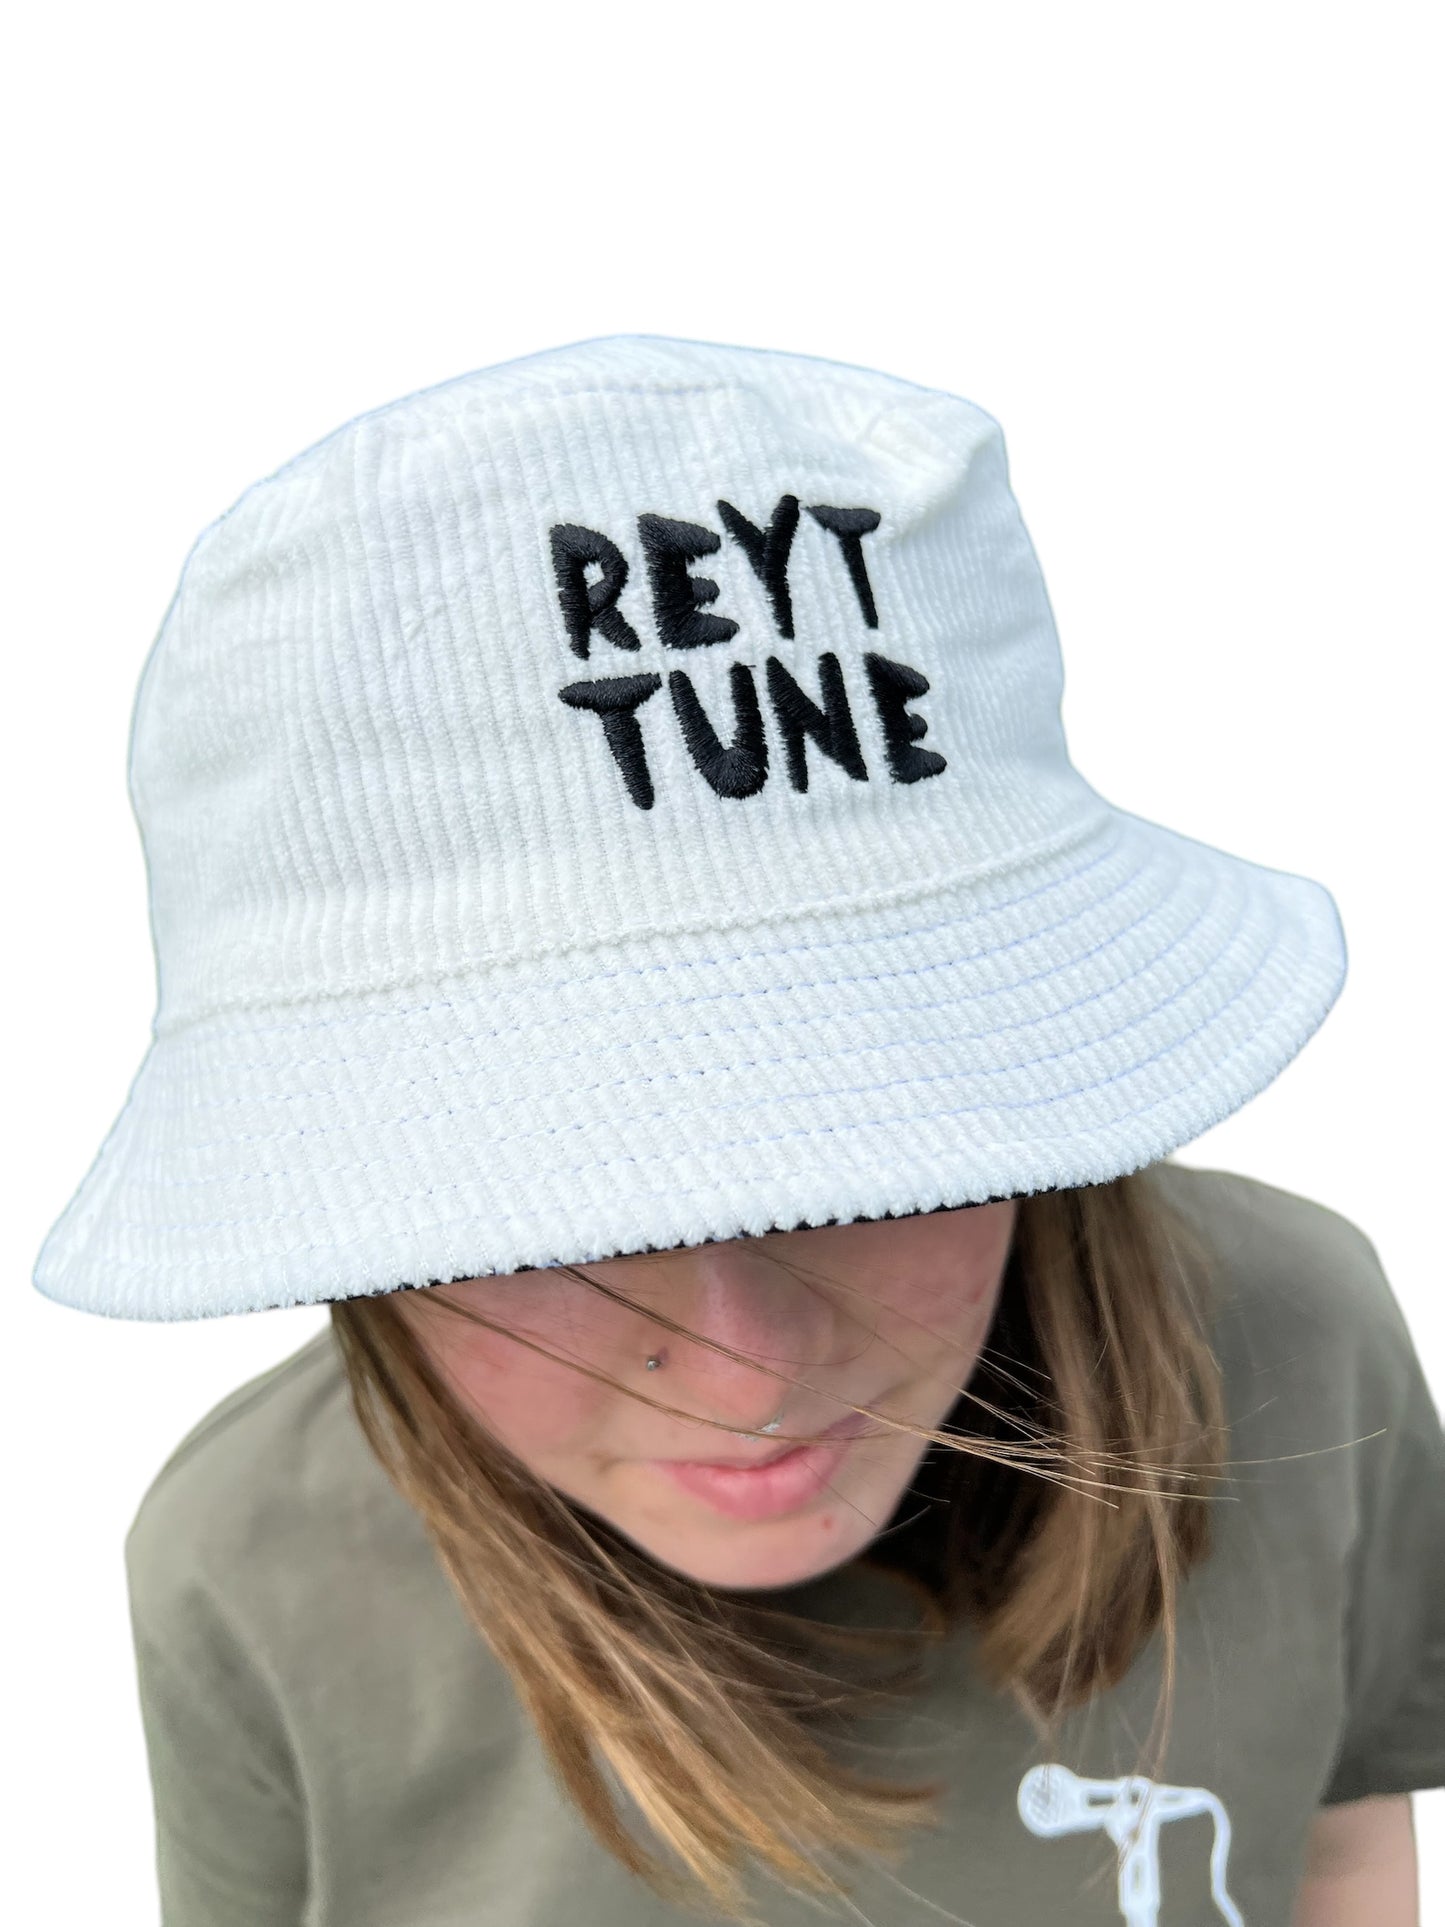 Reyt Tune - Reversible Corduroy Bucket Hat - Luke Horton